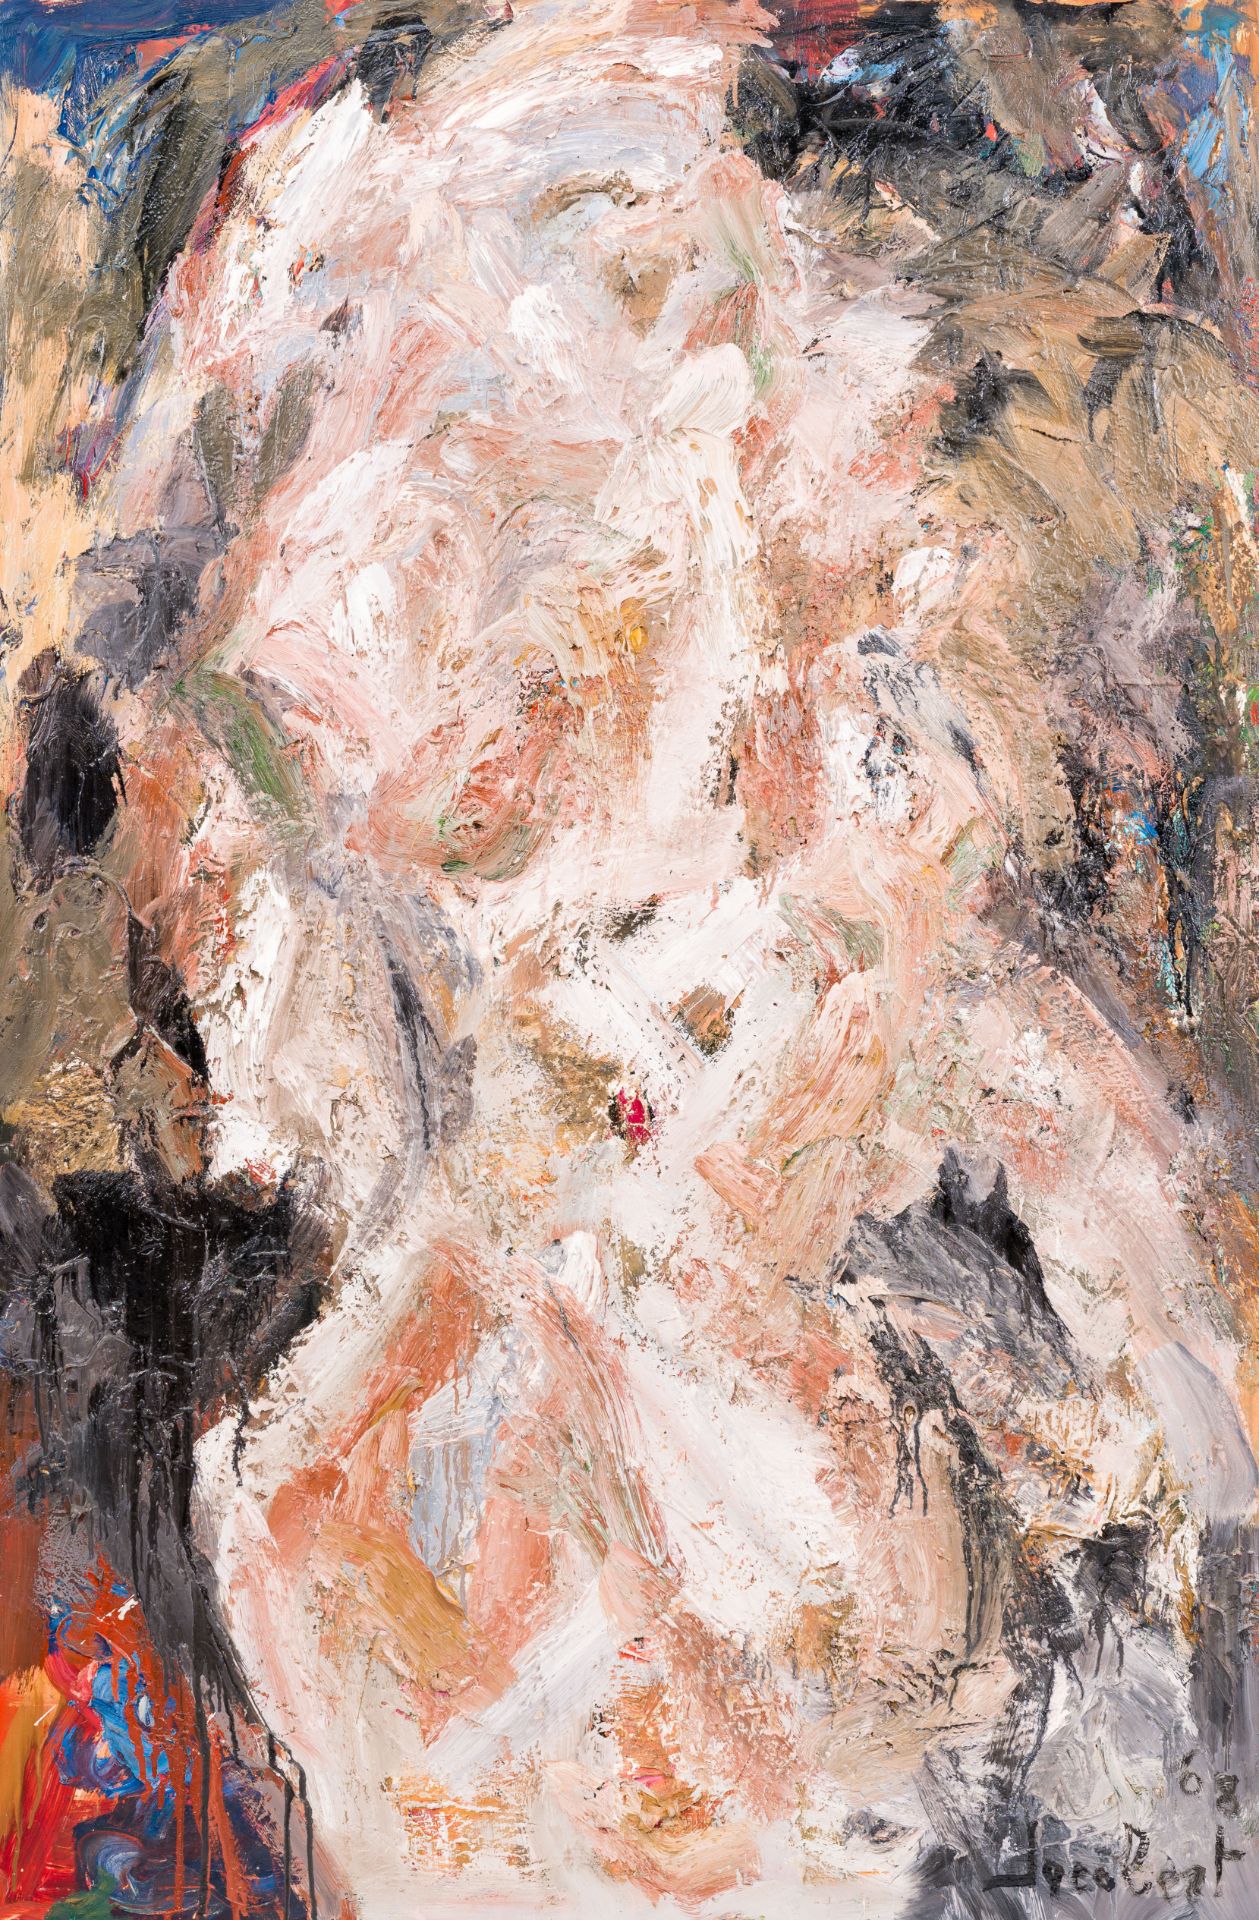 Jacobert (Jacques Busschaert, 1944-2012): Abstract composition, oil on canvas, dated (20)08